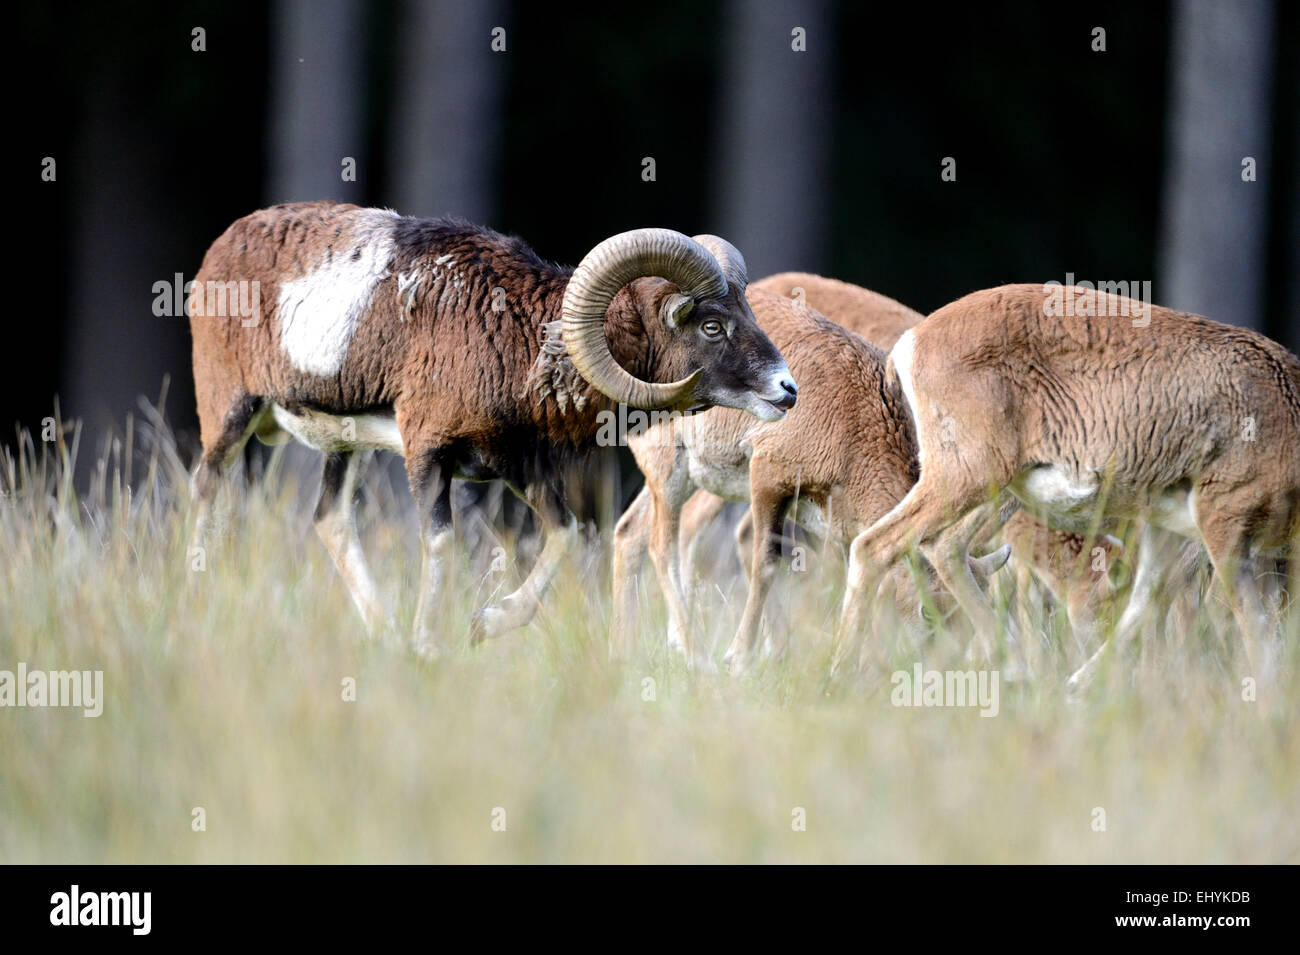 Mufflon, animal, ram, mountain, Ovis ammon musimon, winter coat, game, goat-antelopes, horns, autumn, Germany Stock Photo